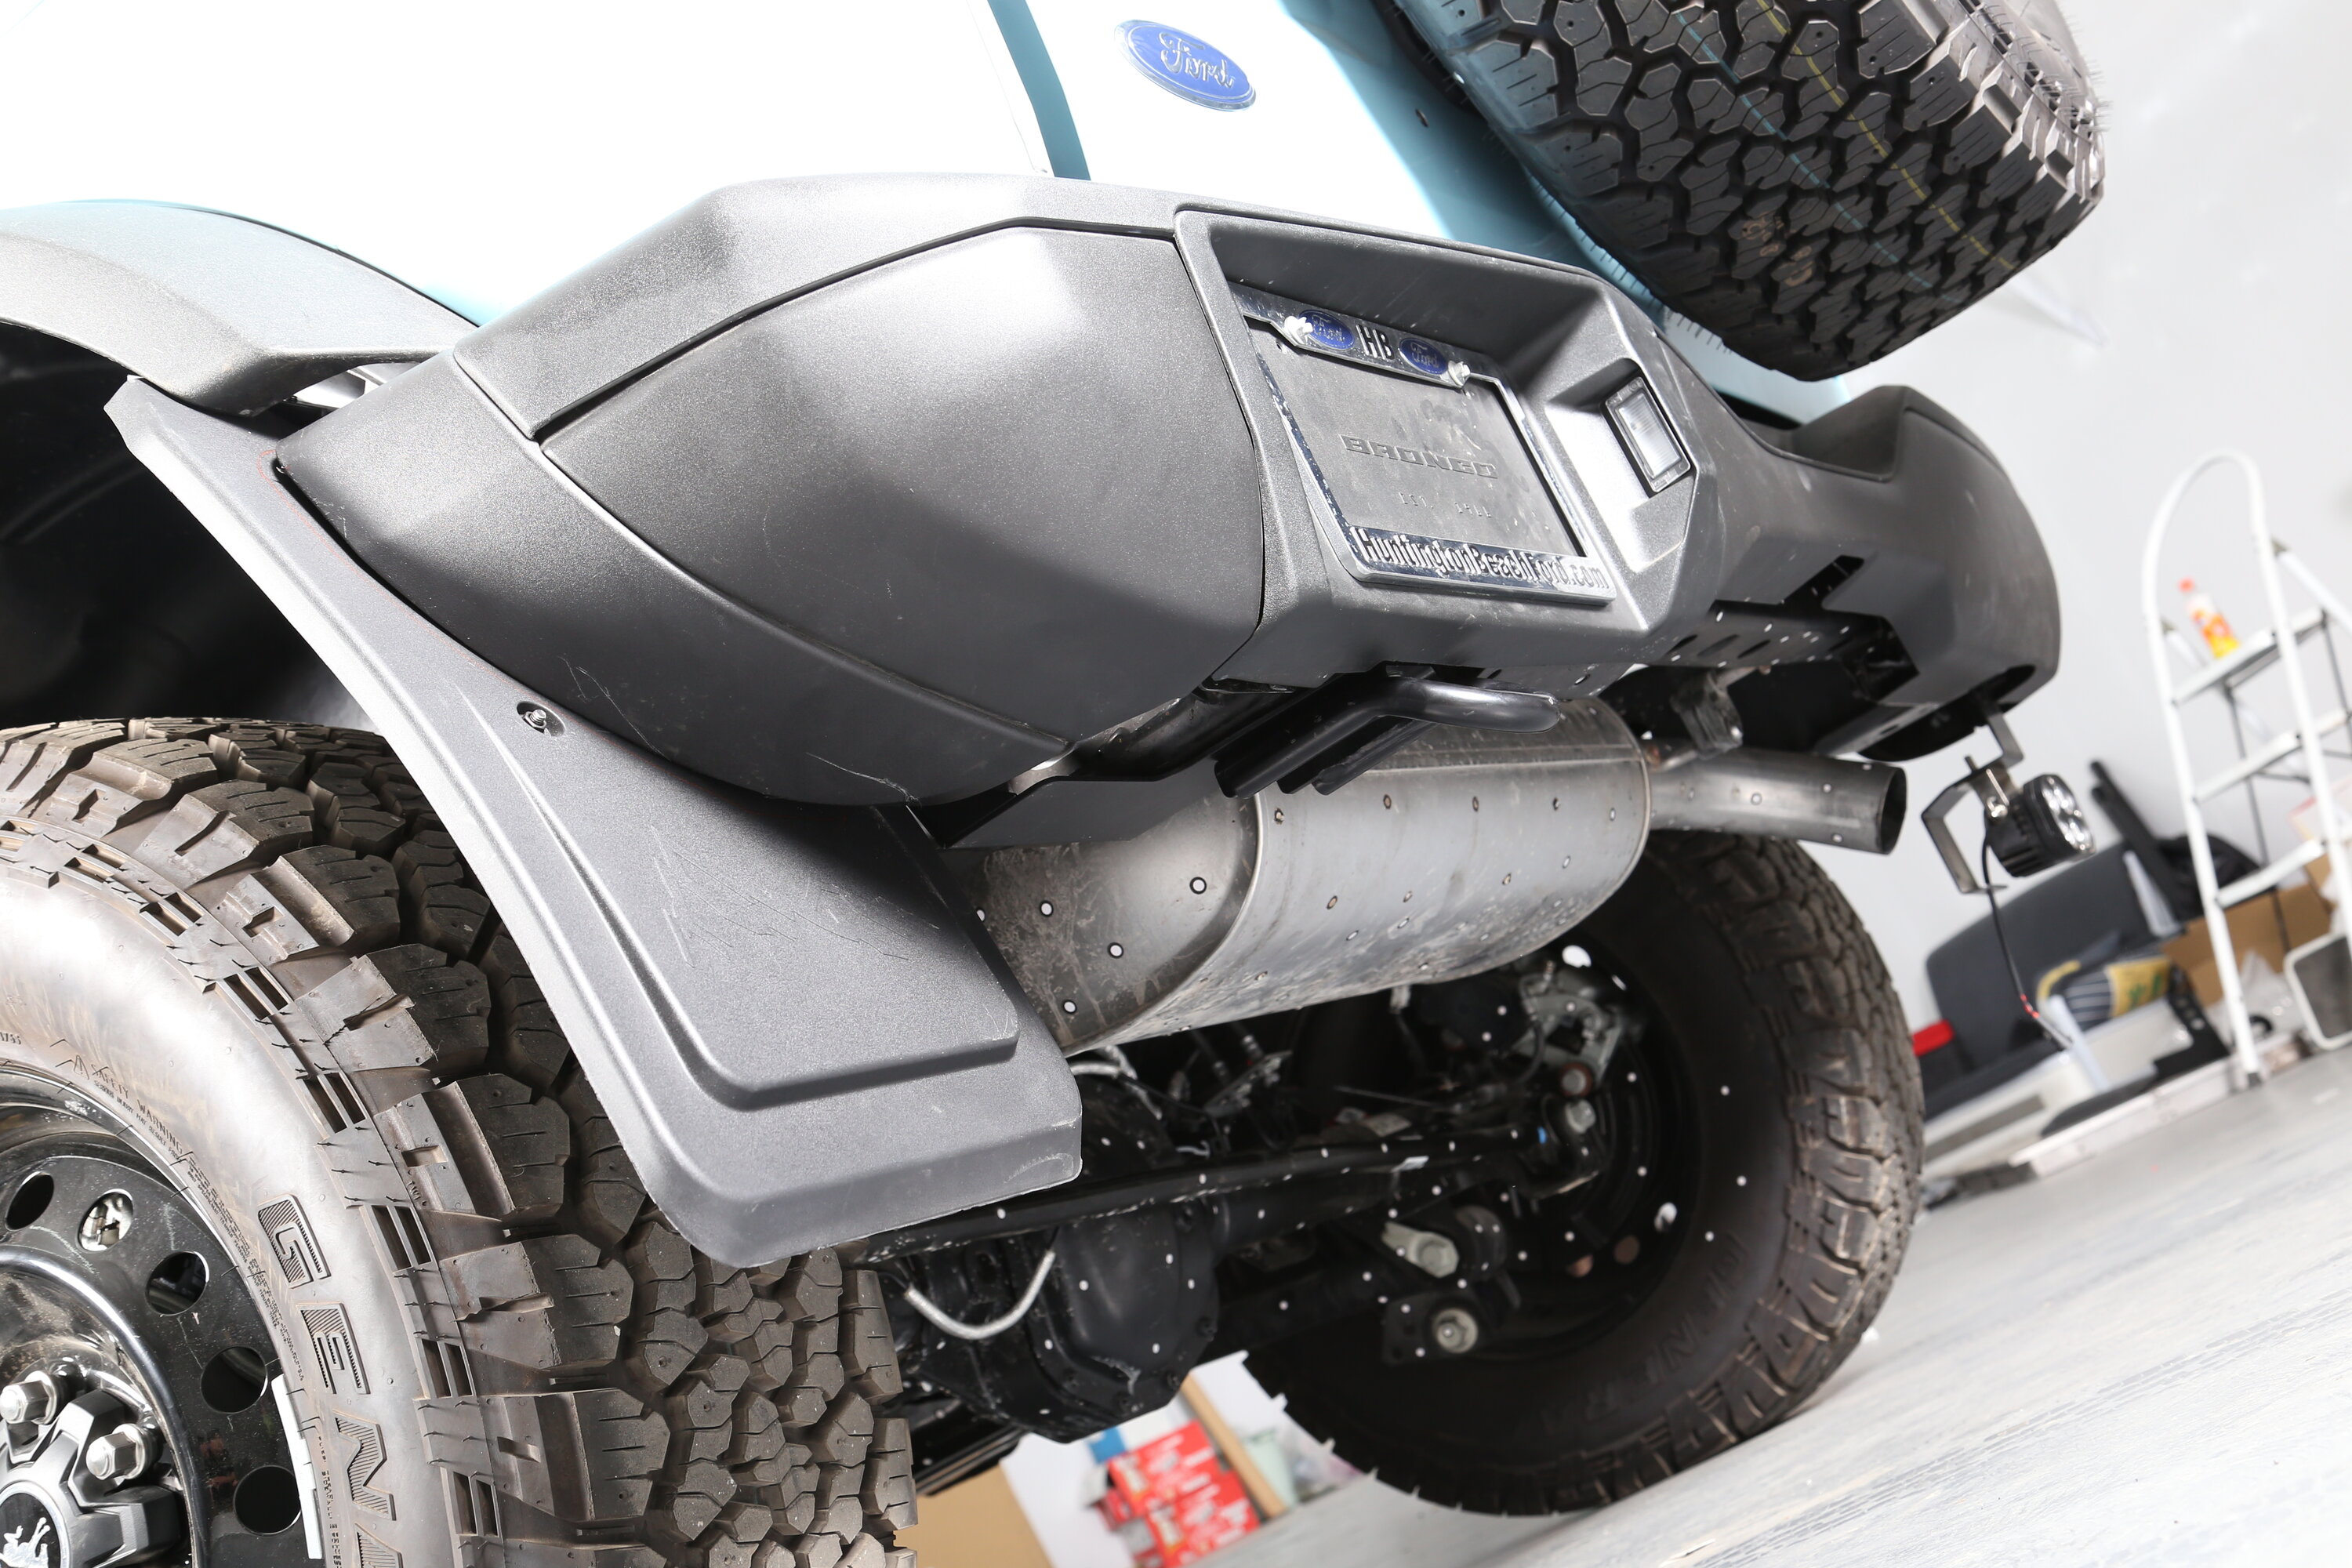 Ford Bronco Mabett Mud Flaps Fits Sasquatch set that accommodates factory rock rails or tube steps IMG_1323.JPG